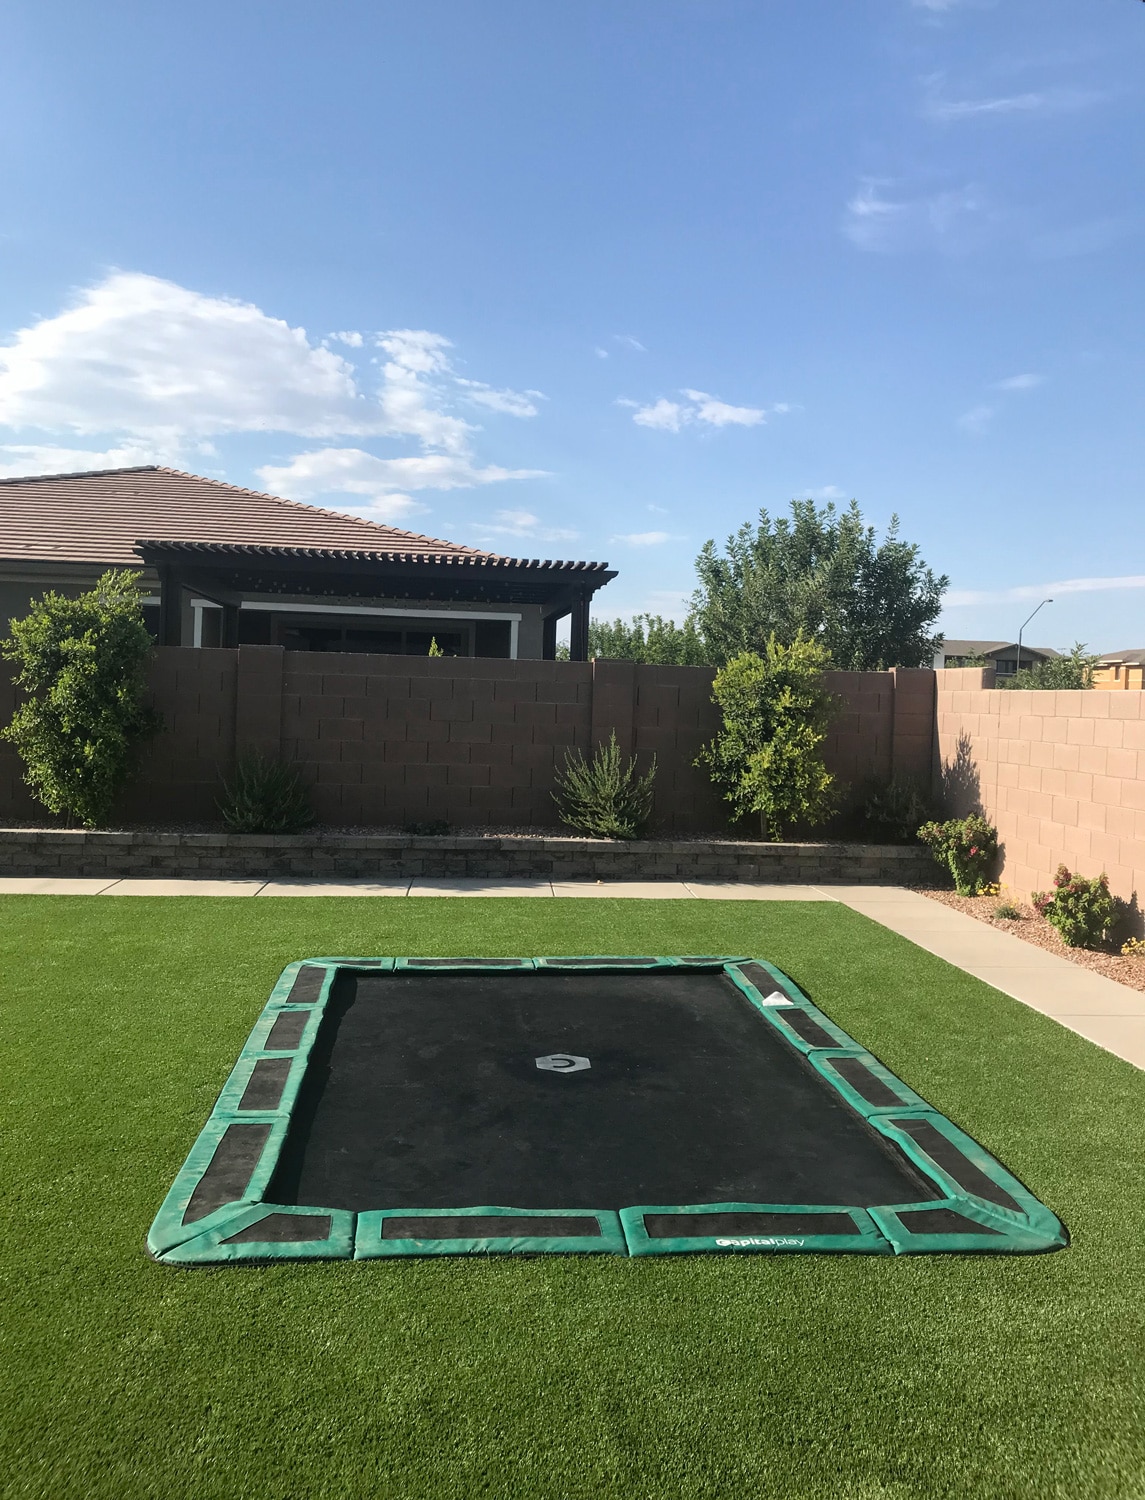 The Jump Shack rectangular backyard in-ground trampoline